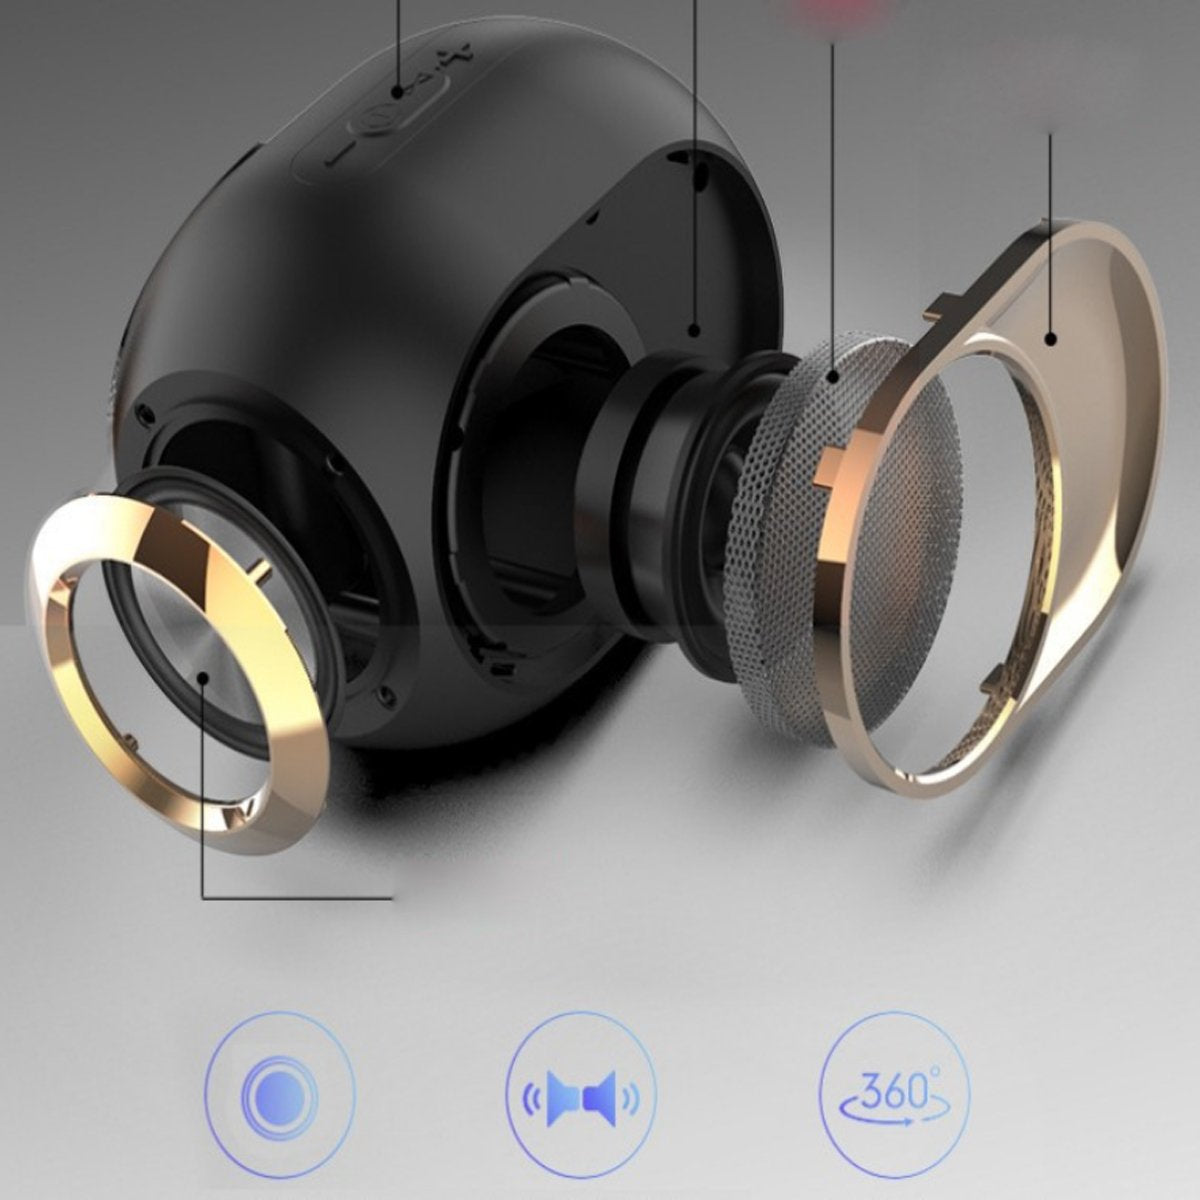 Golden Dragon Bluetooth Speaker